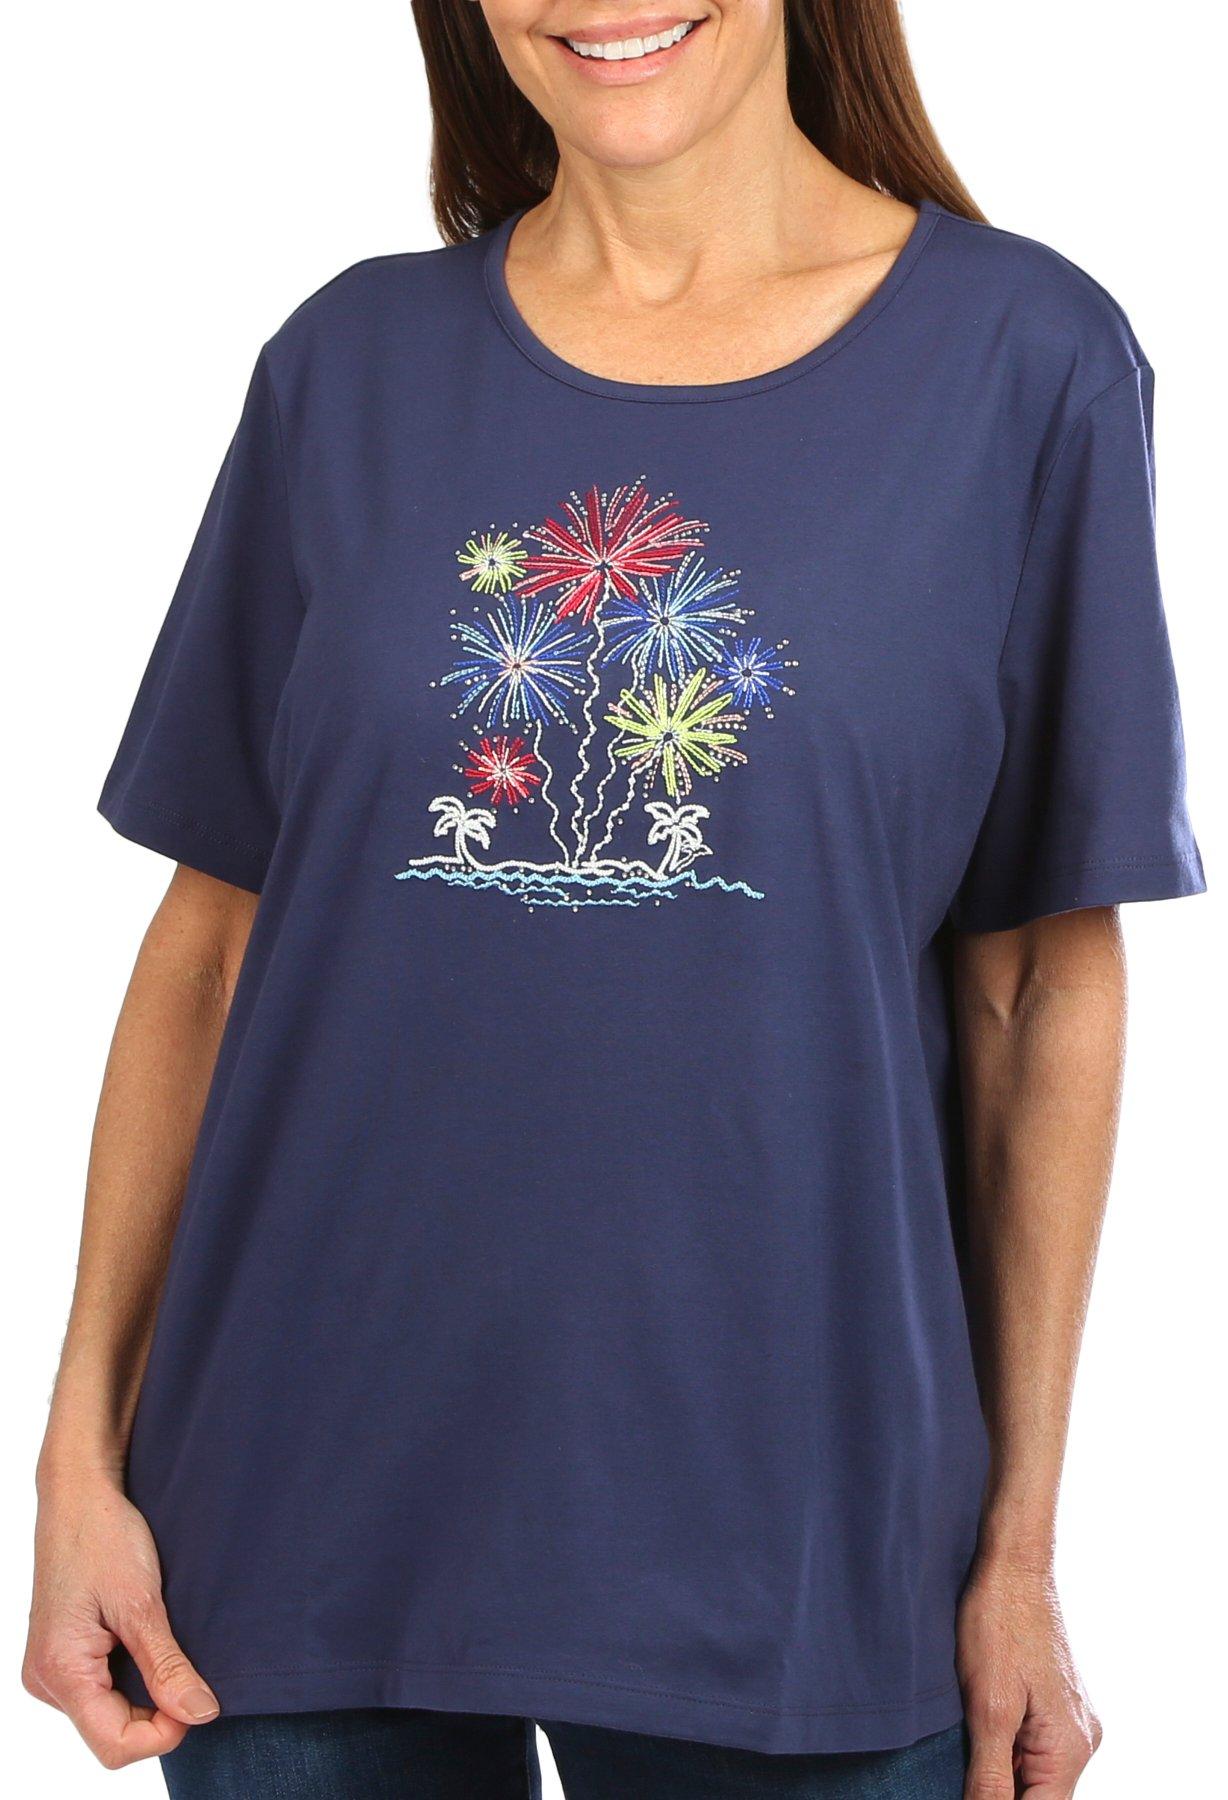 Coral Bay Petite Americana Fireworks Jewel Short Sleeve